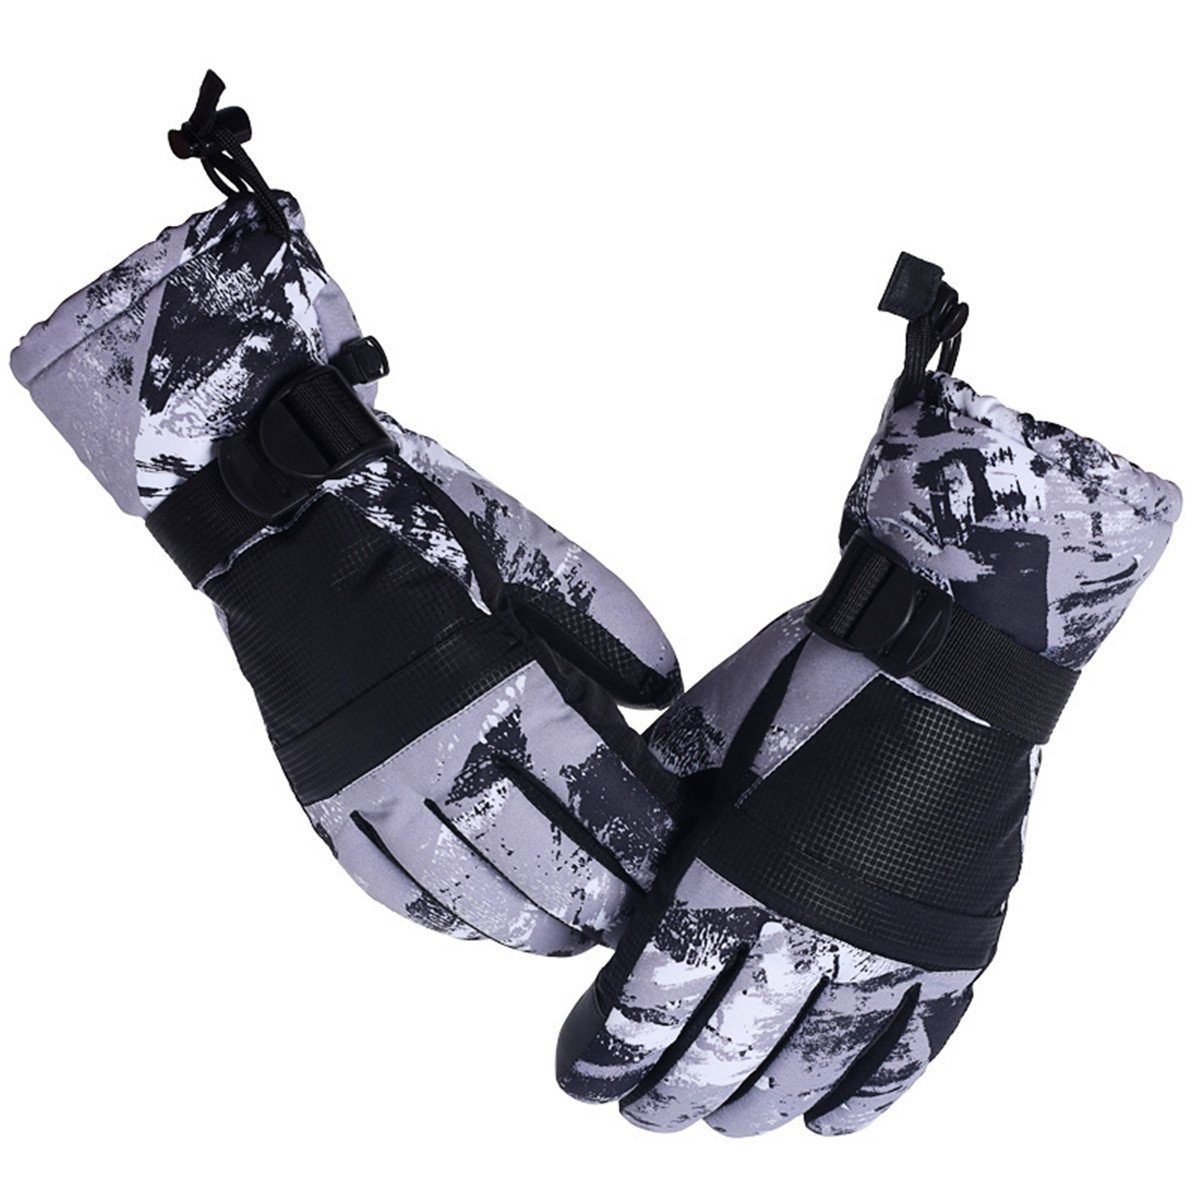 Die Sterne Langlaufhandschuhe Kinder/Männer/Damen Winter-Outdoor-Sport-Snowboard-Handschuhe grau